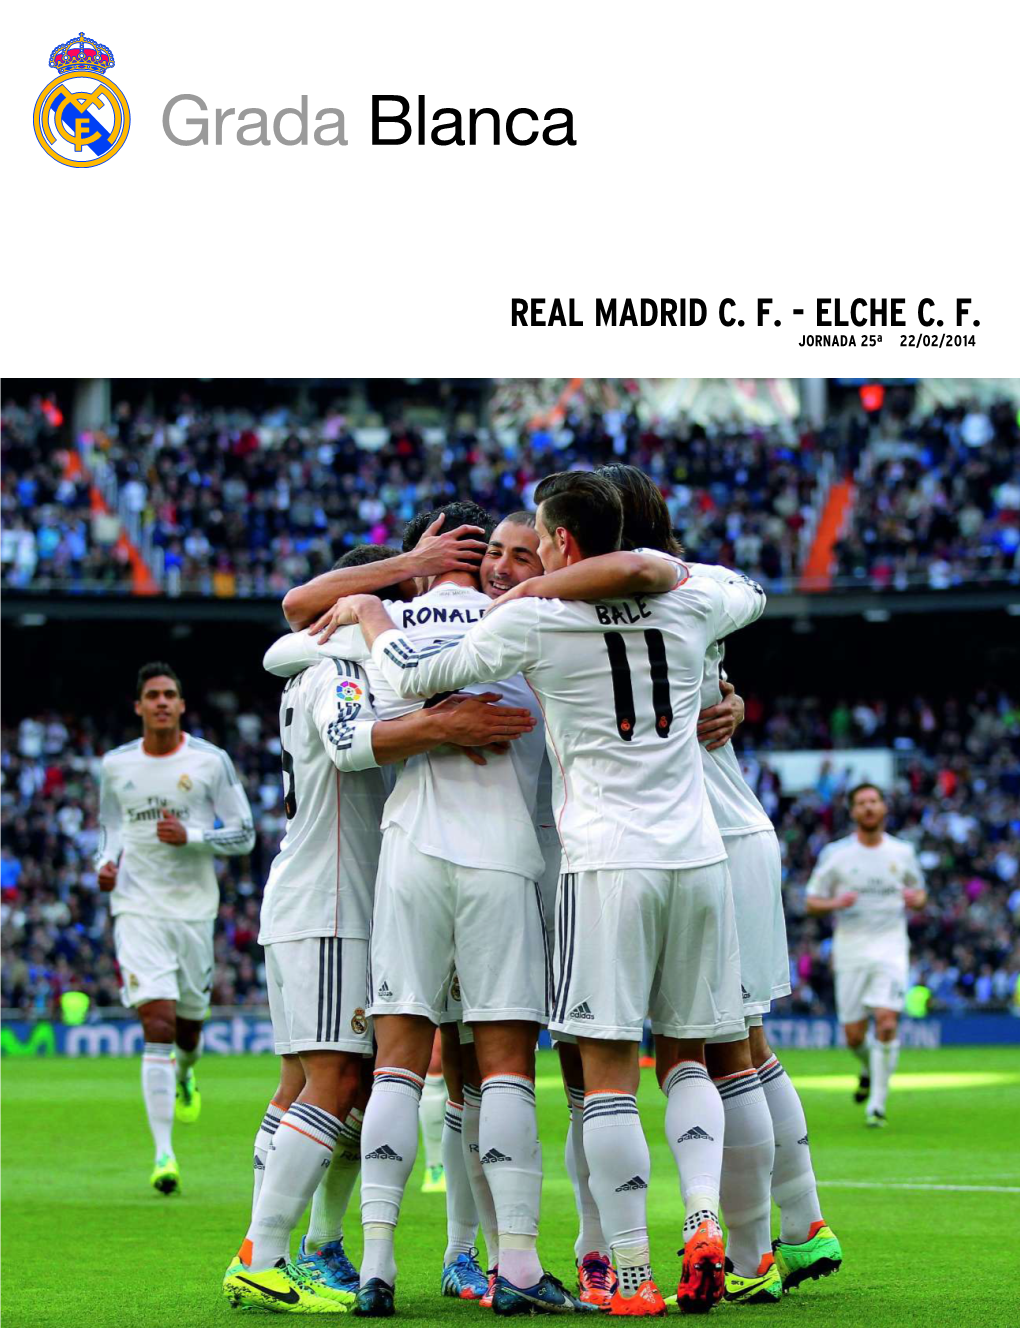 Real Madrid C. F. - Elche C